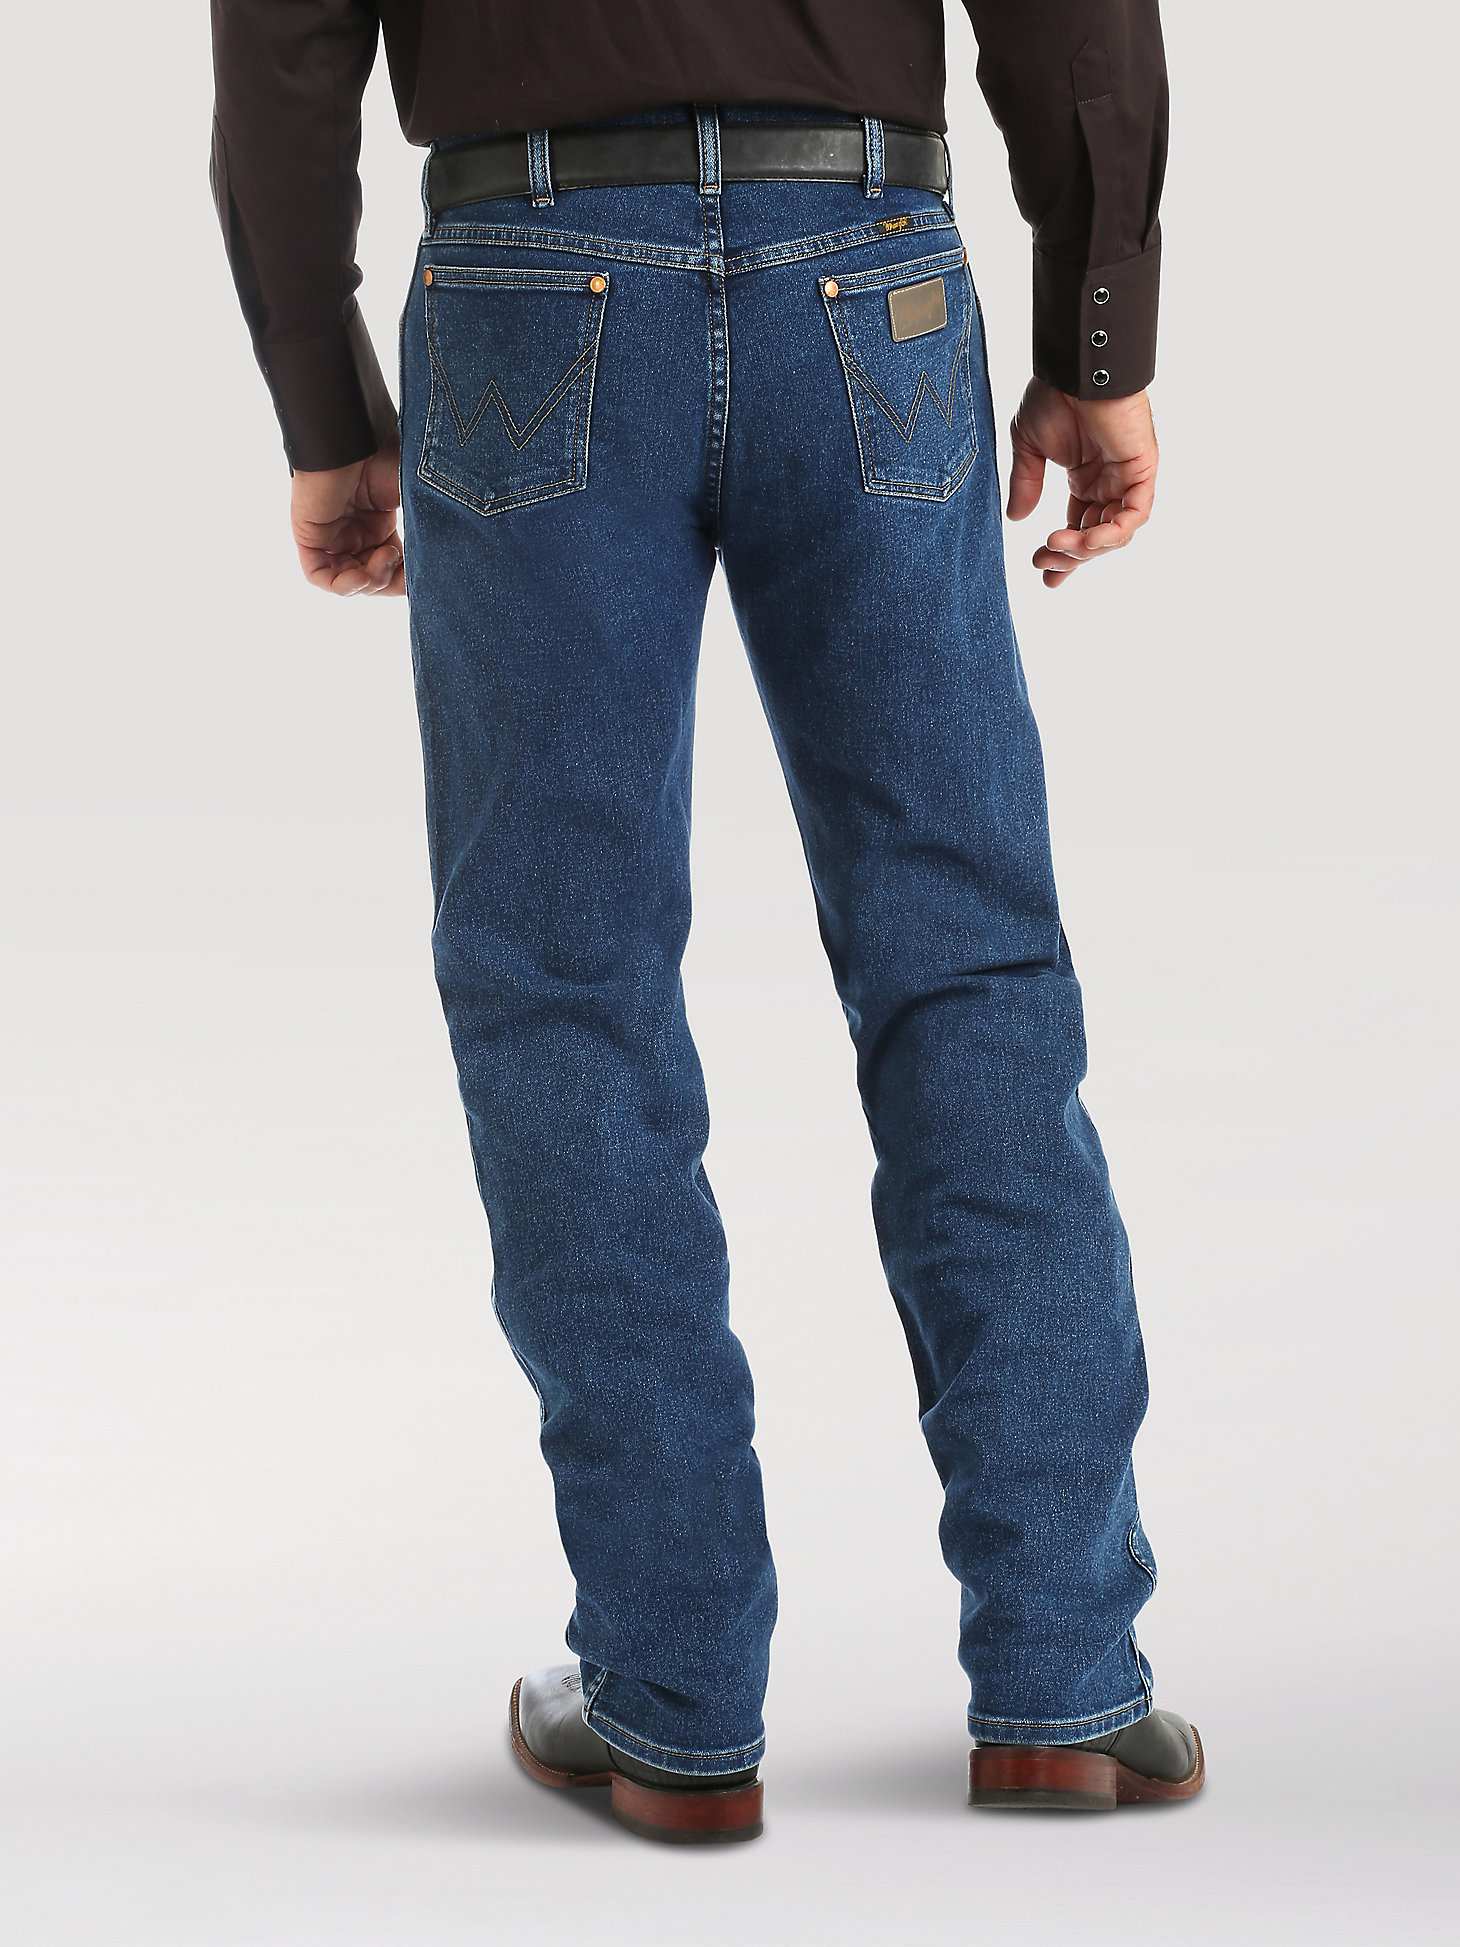 Wrangler® Cowboy Cut® Original Fit Active Flex Jeans in Stonewash alternative view 2